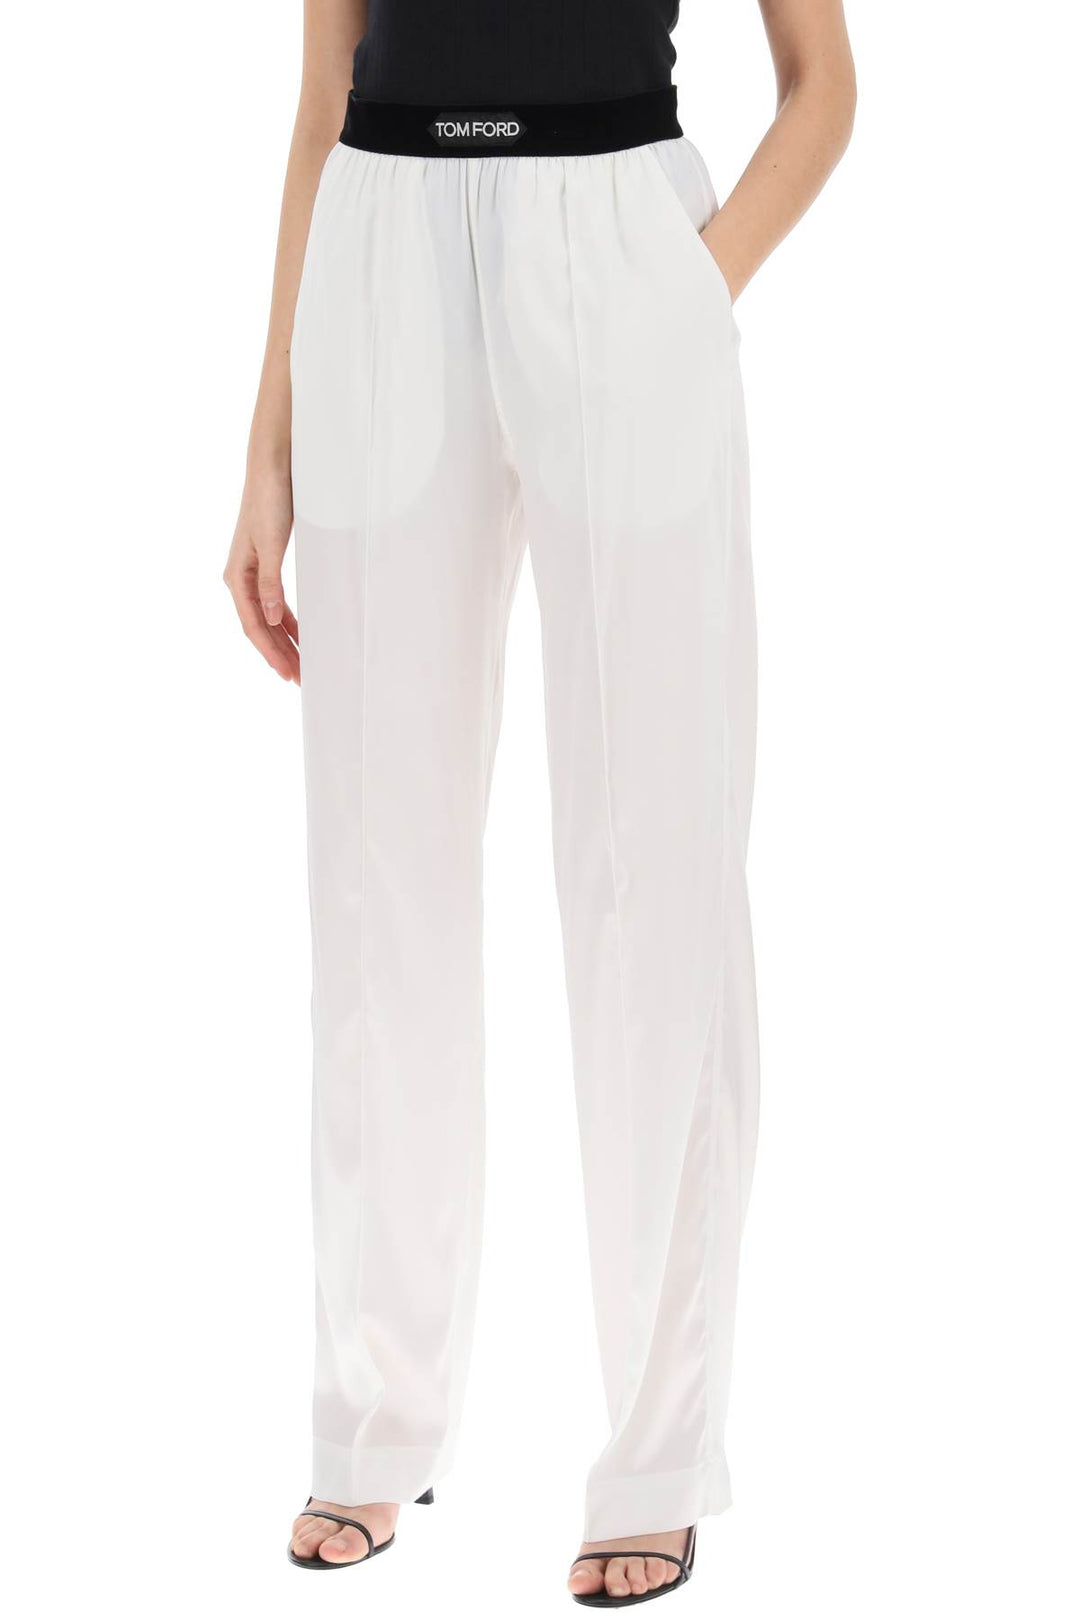 Tom Ford Silk Pajama Pants   Bianco